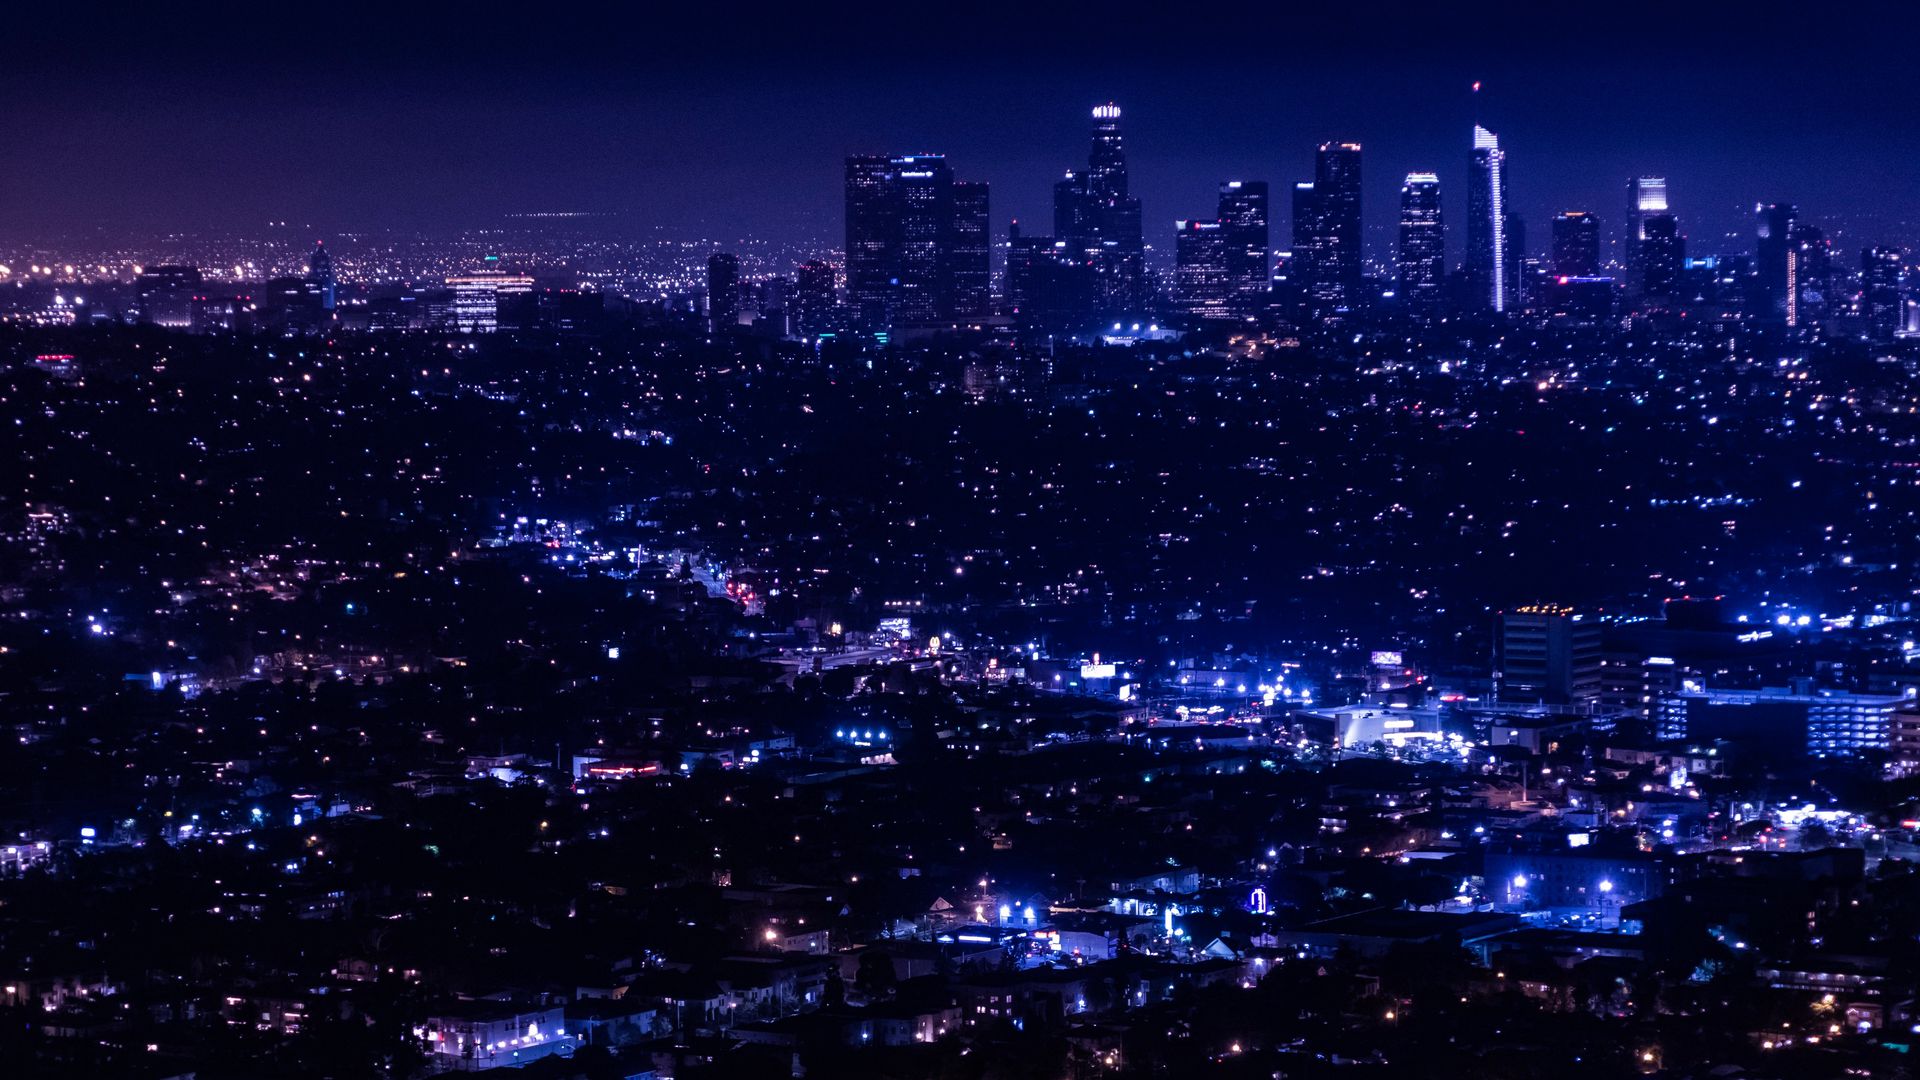 city lights at night background